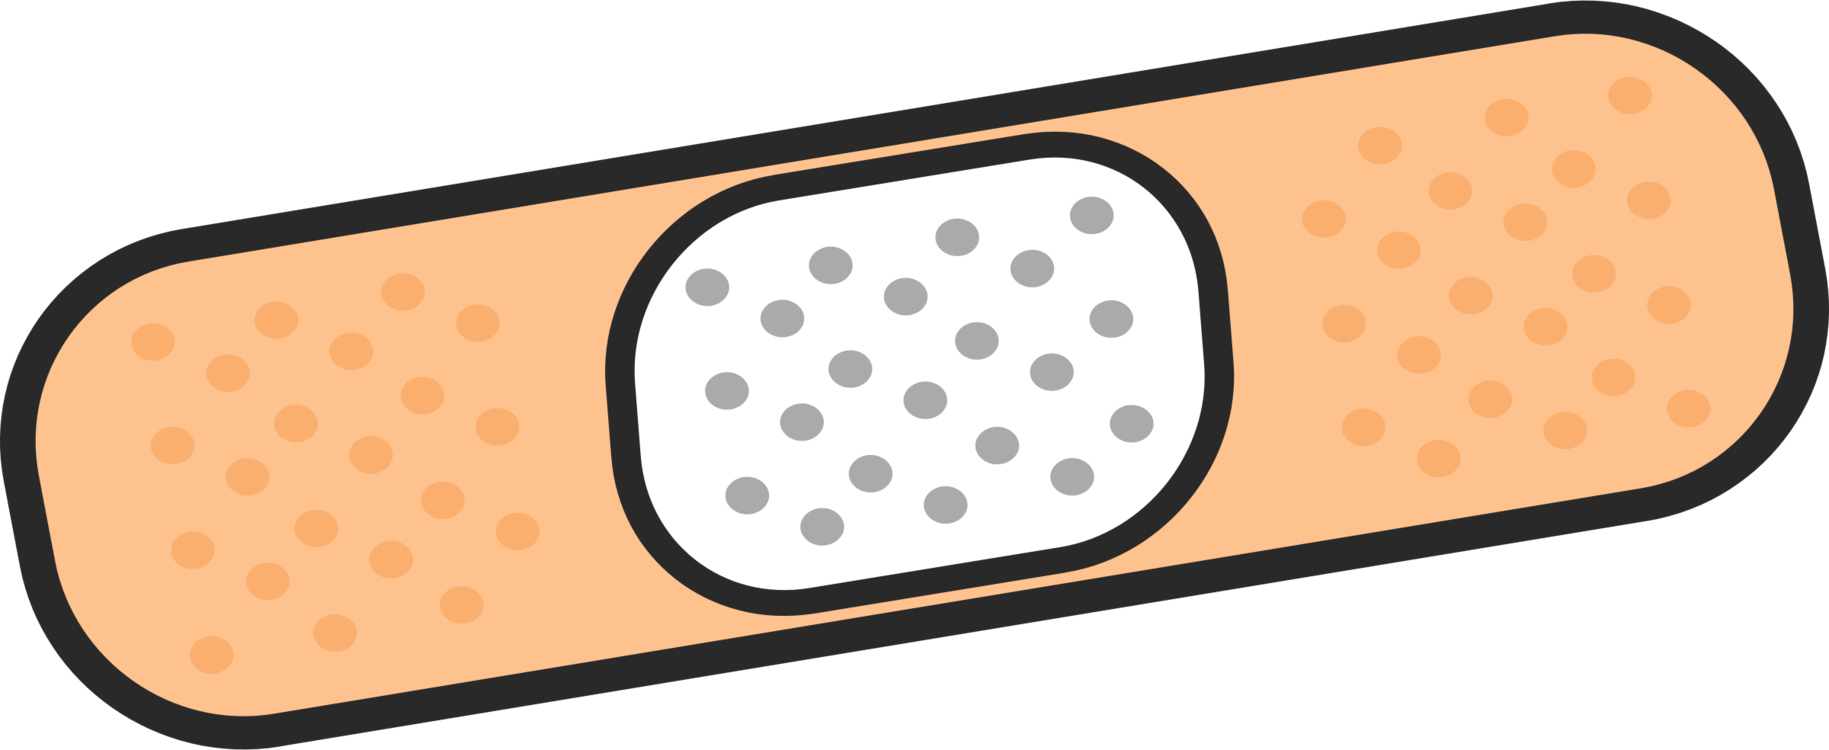 Adhesive Bandage Vector Illustration PNG